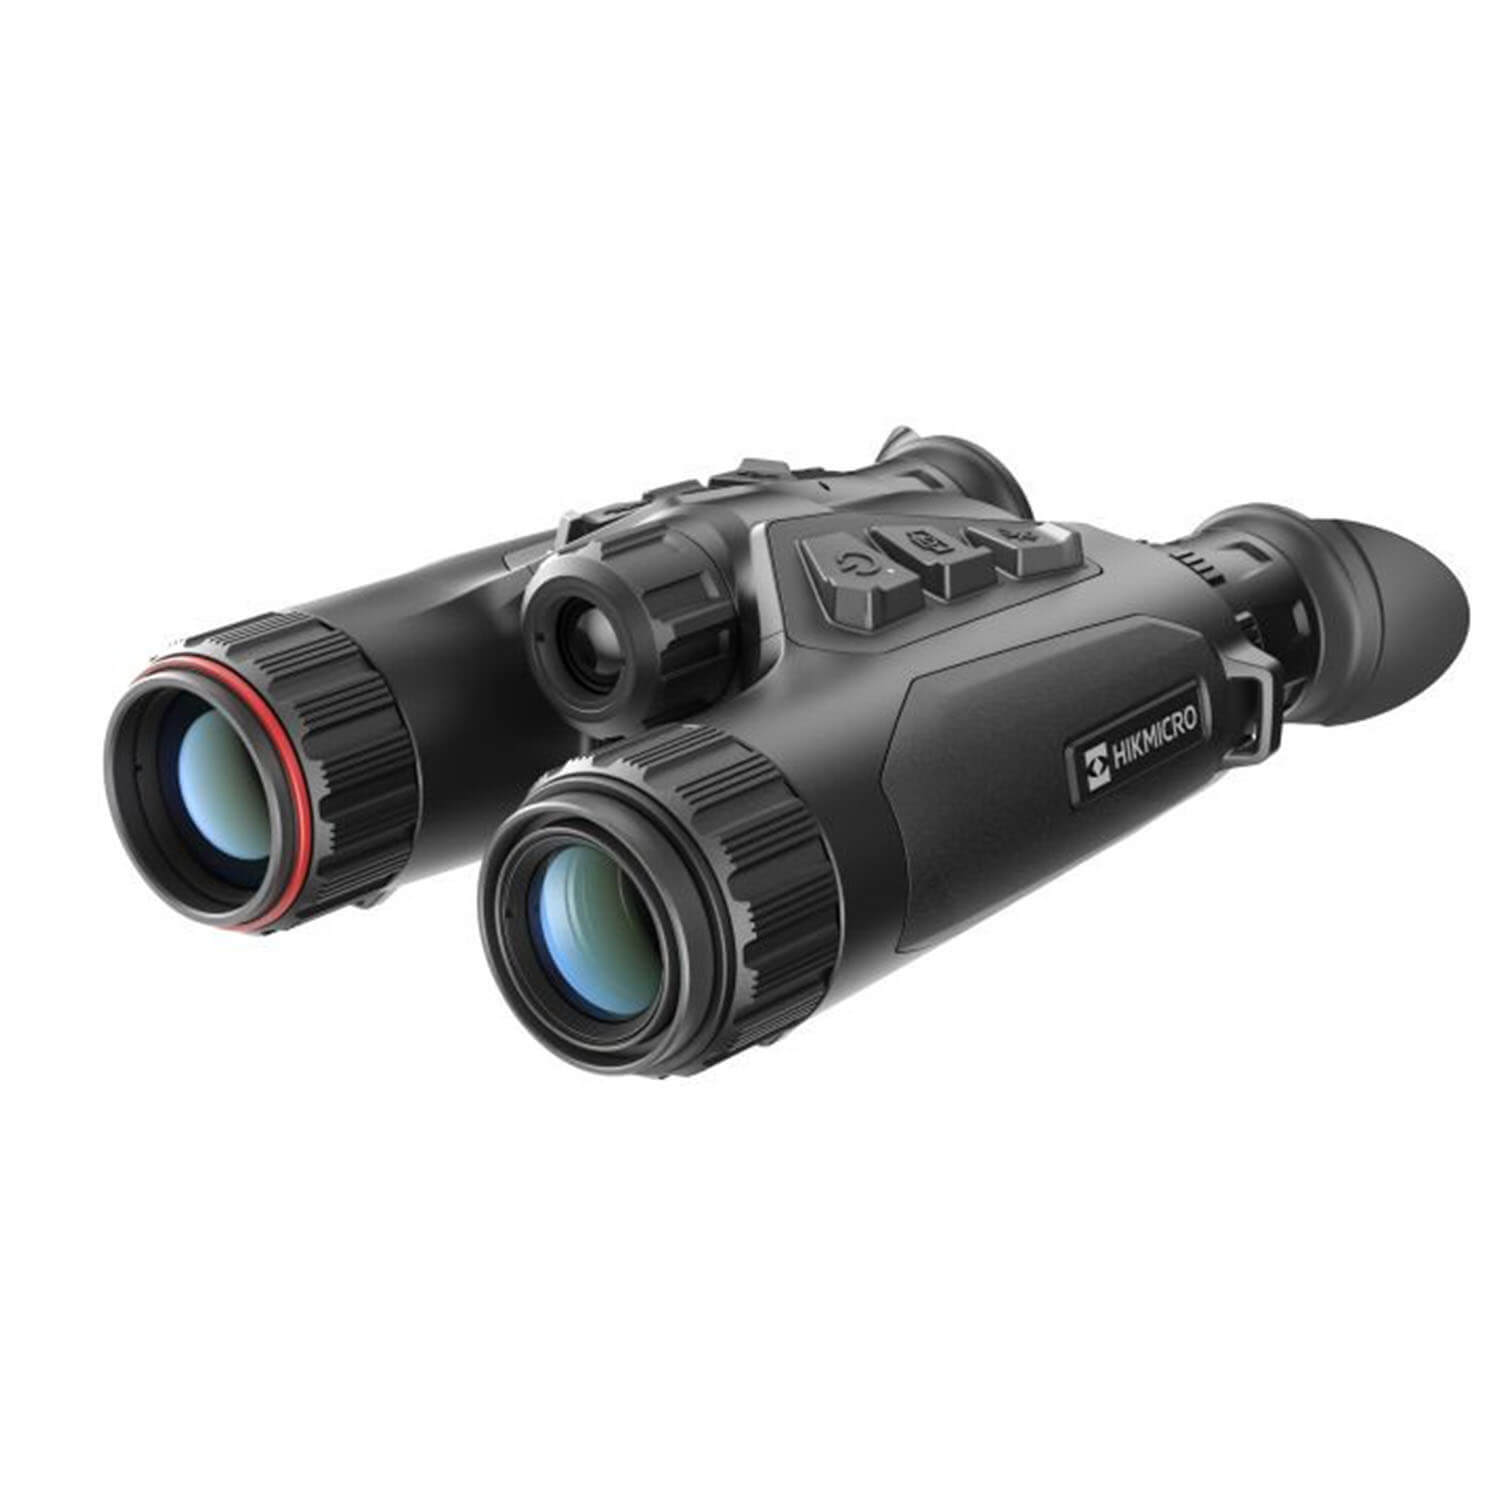 Hikmicro Thermal Imaging Binoculars Habrok 4K HE25LN - Night Vision Devices